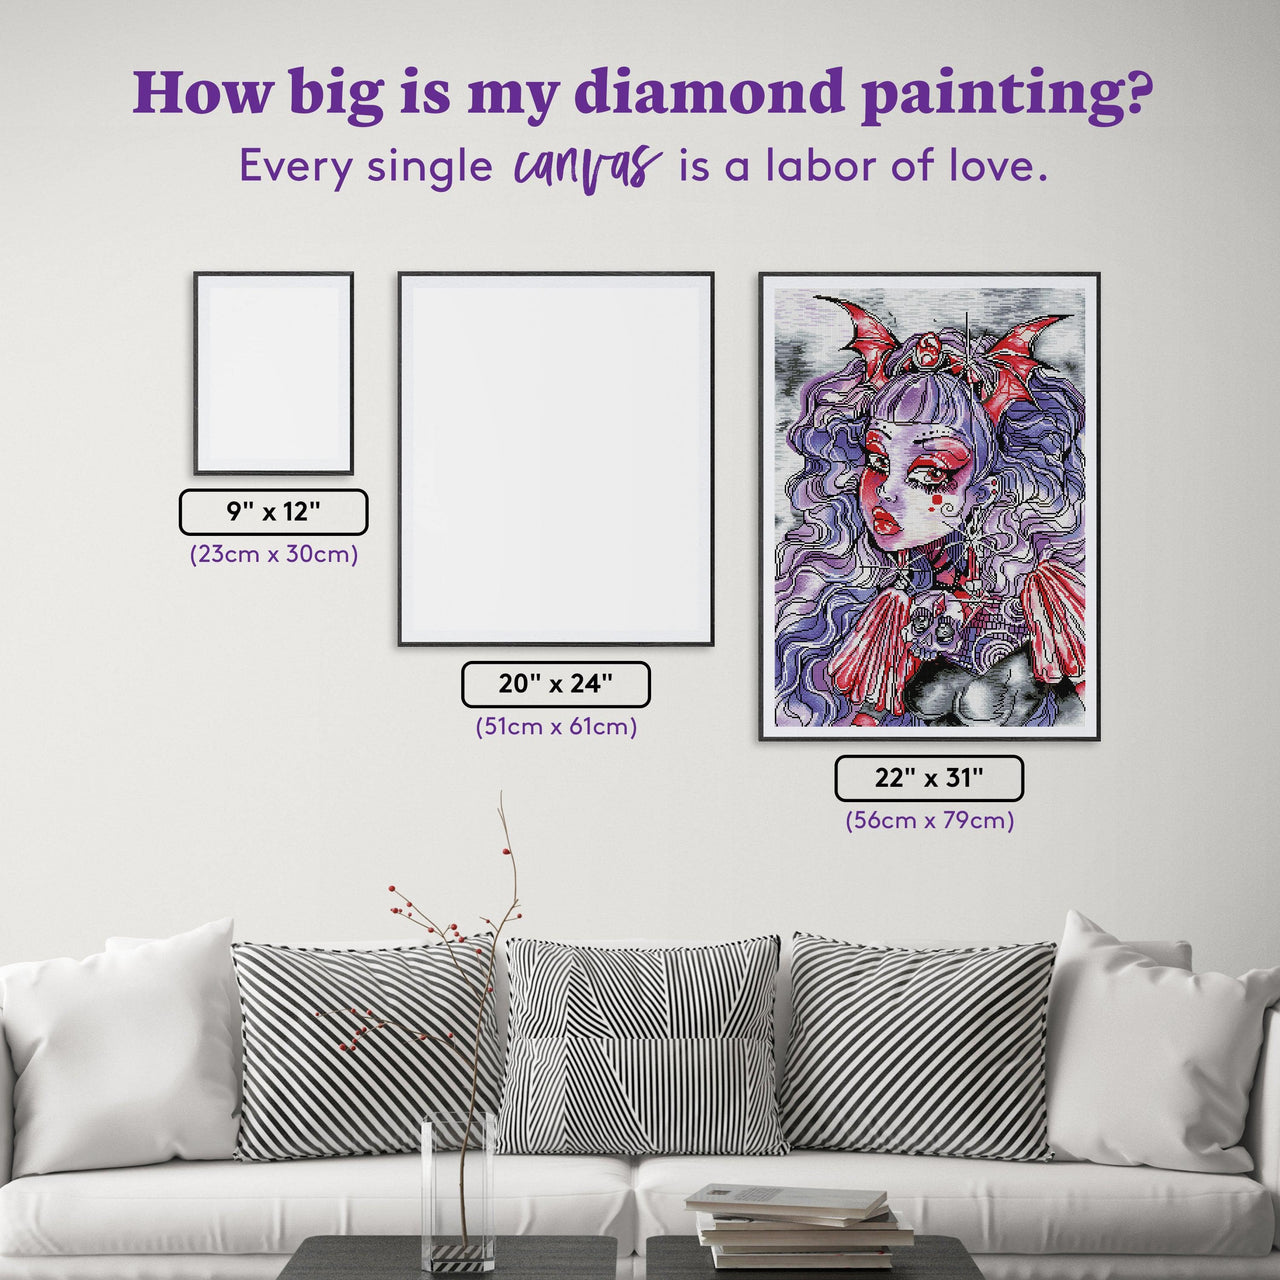 Diamond Painting Bat Princess 22" x 31" (56cm x 79cm) / Square With 29 Colors Including 5 ABs / 68,952